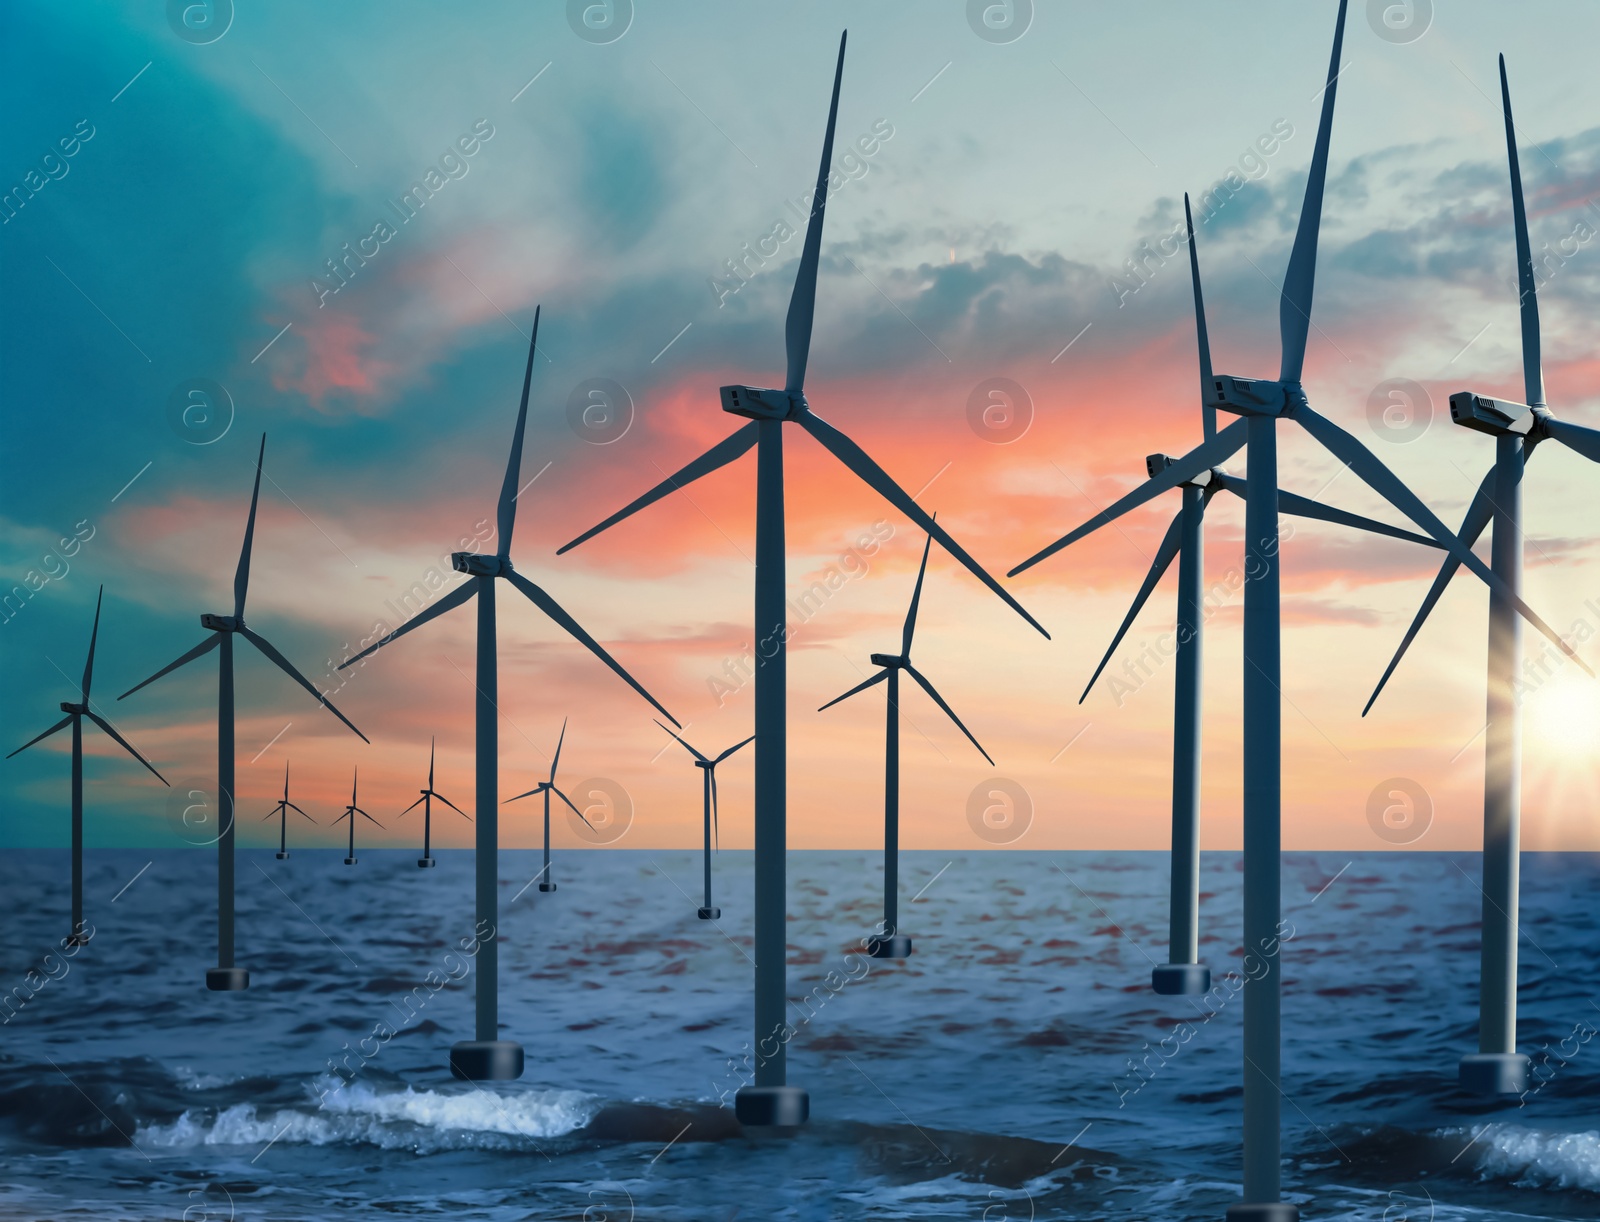 Image of Floating wind turbines installed in sea. Alternative energy source 